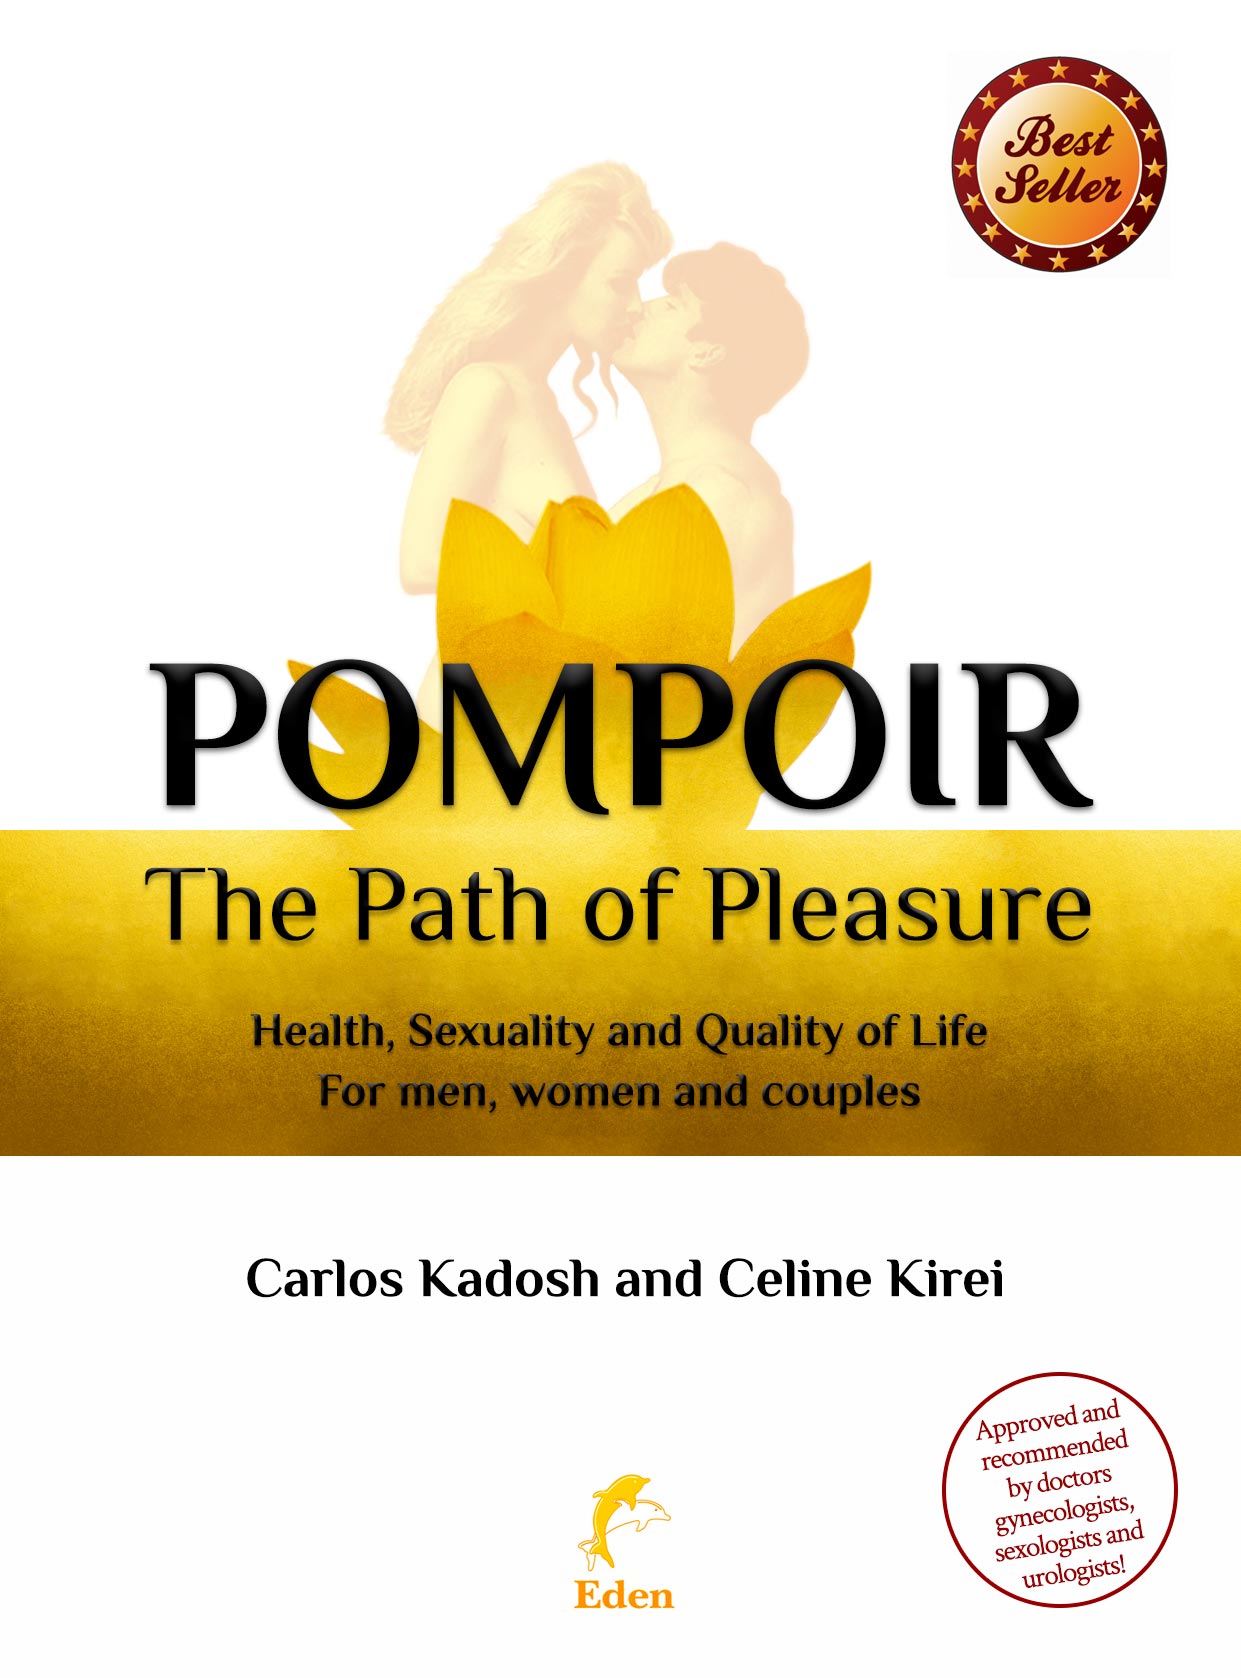 Pompoir: The Path of Pleasure